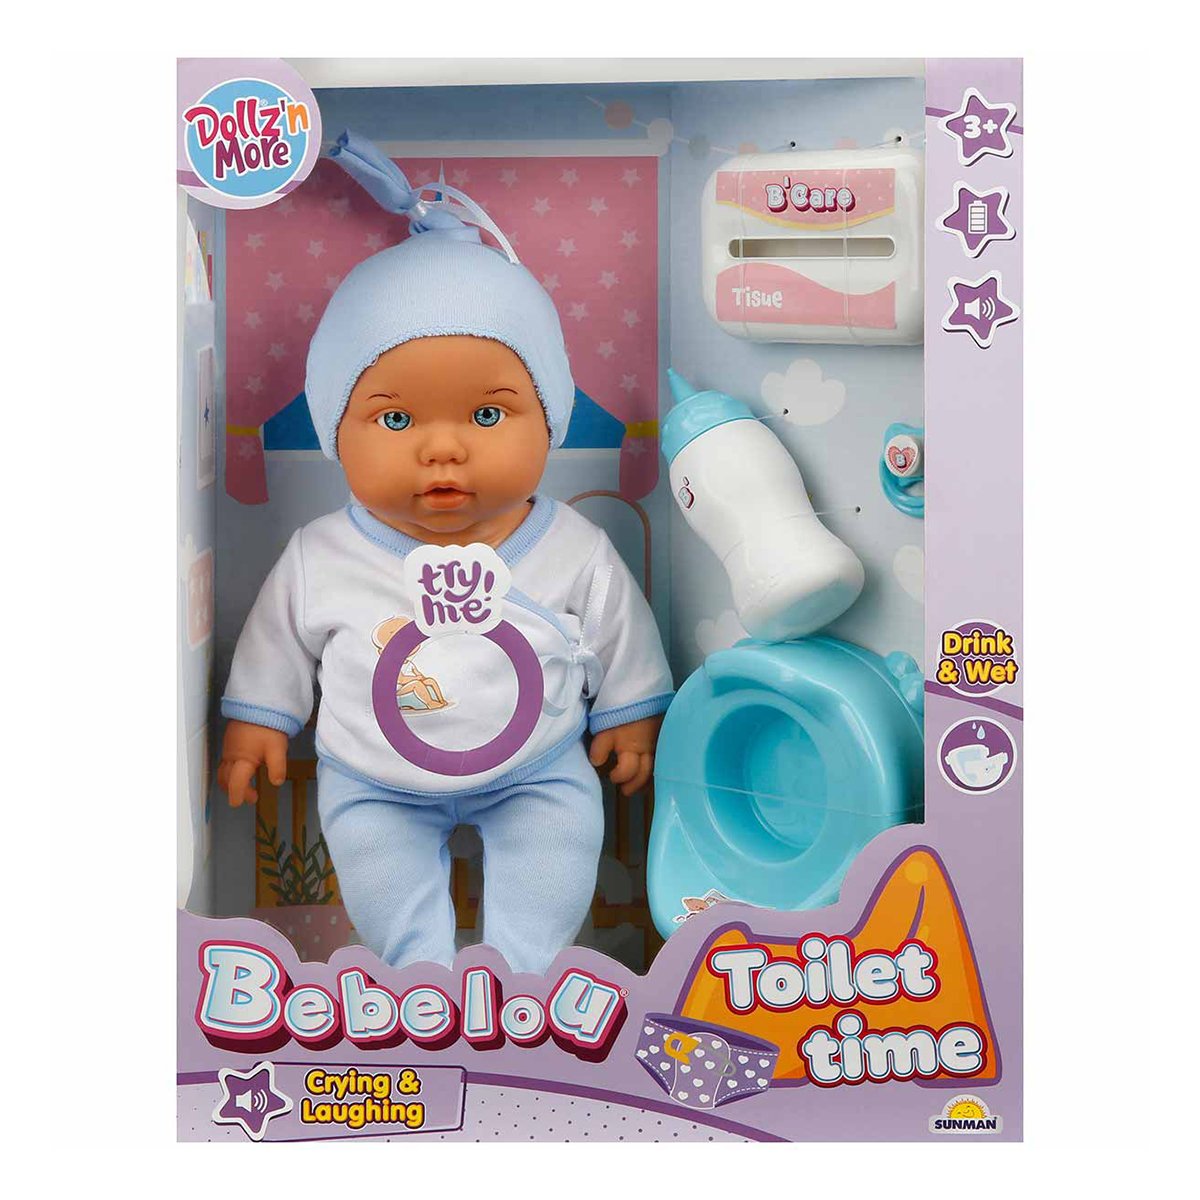 Papusa bebelus Bebelou, Dollzn More, Toilet Time, 35 cm, albastru Dollz n More